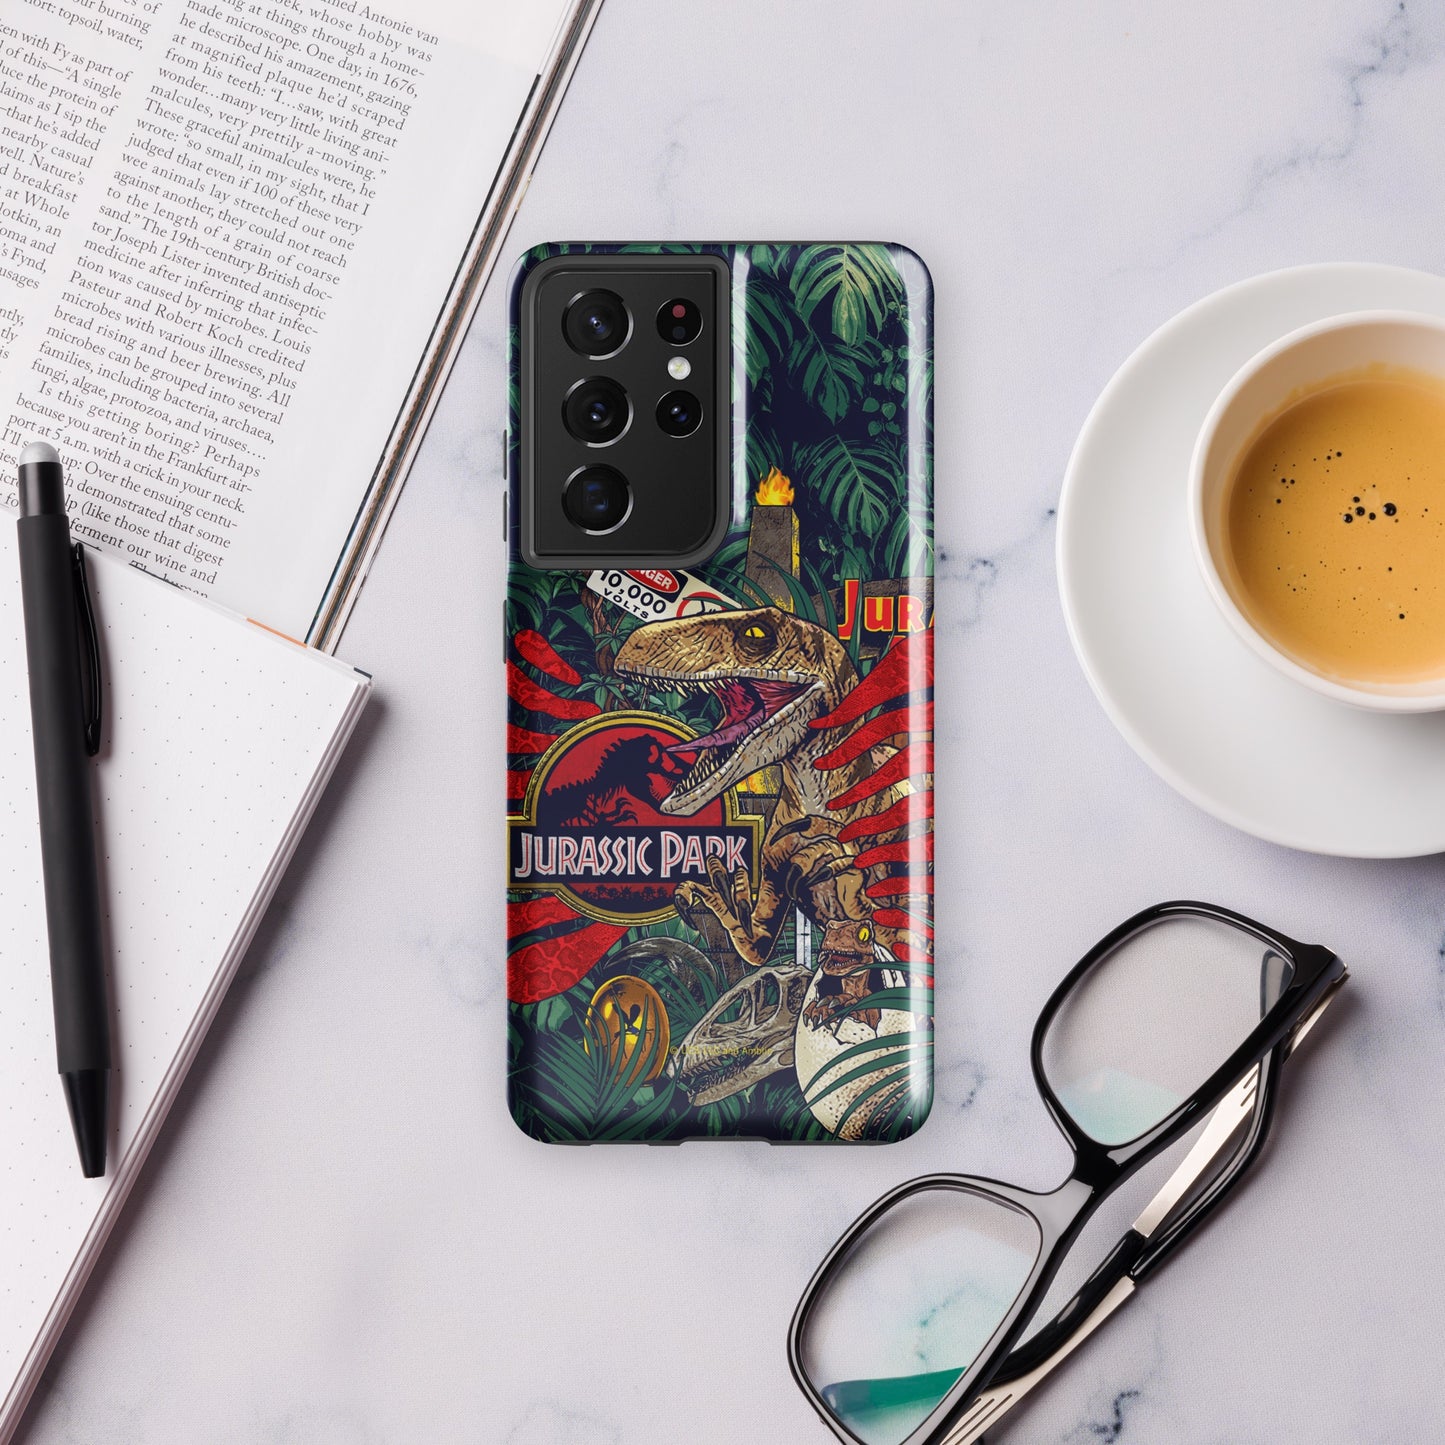 Jurassic Park Jungle Collage Tough Phone Case - Samsung